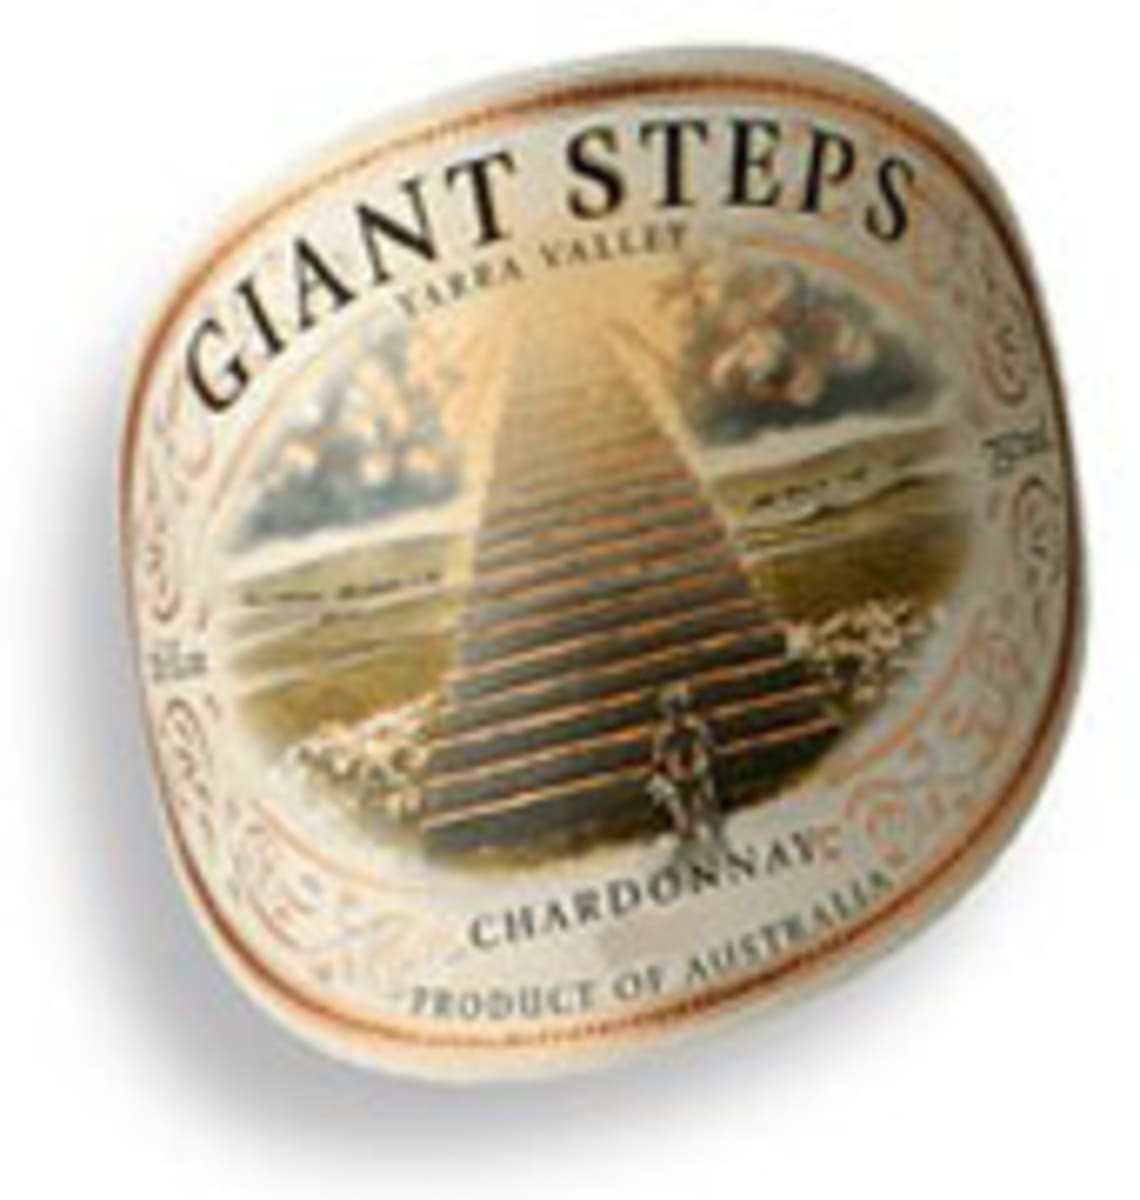 Giant Steps Chardonnay 2002 Front Label